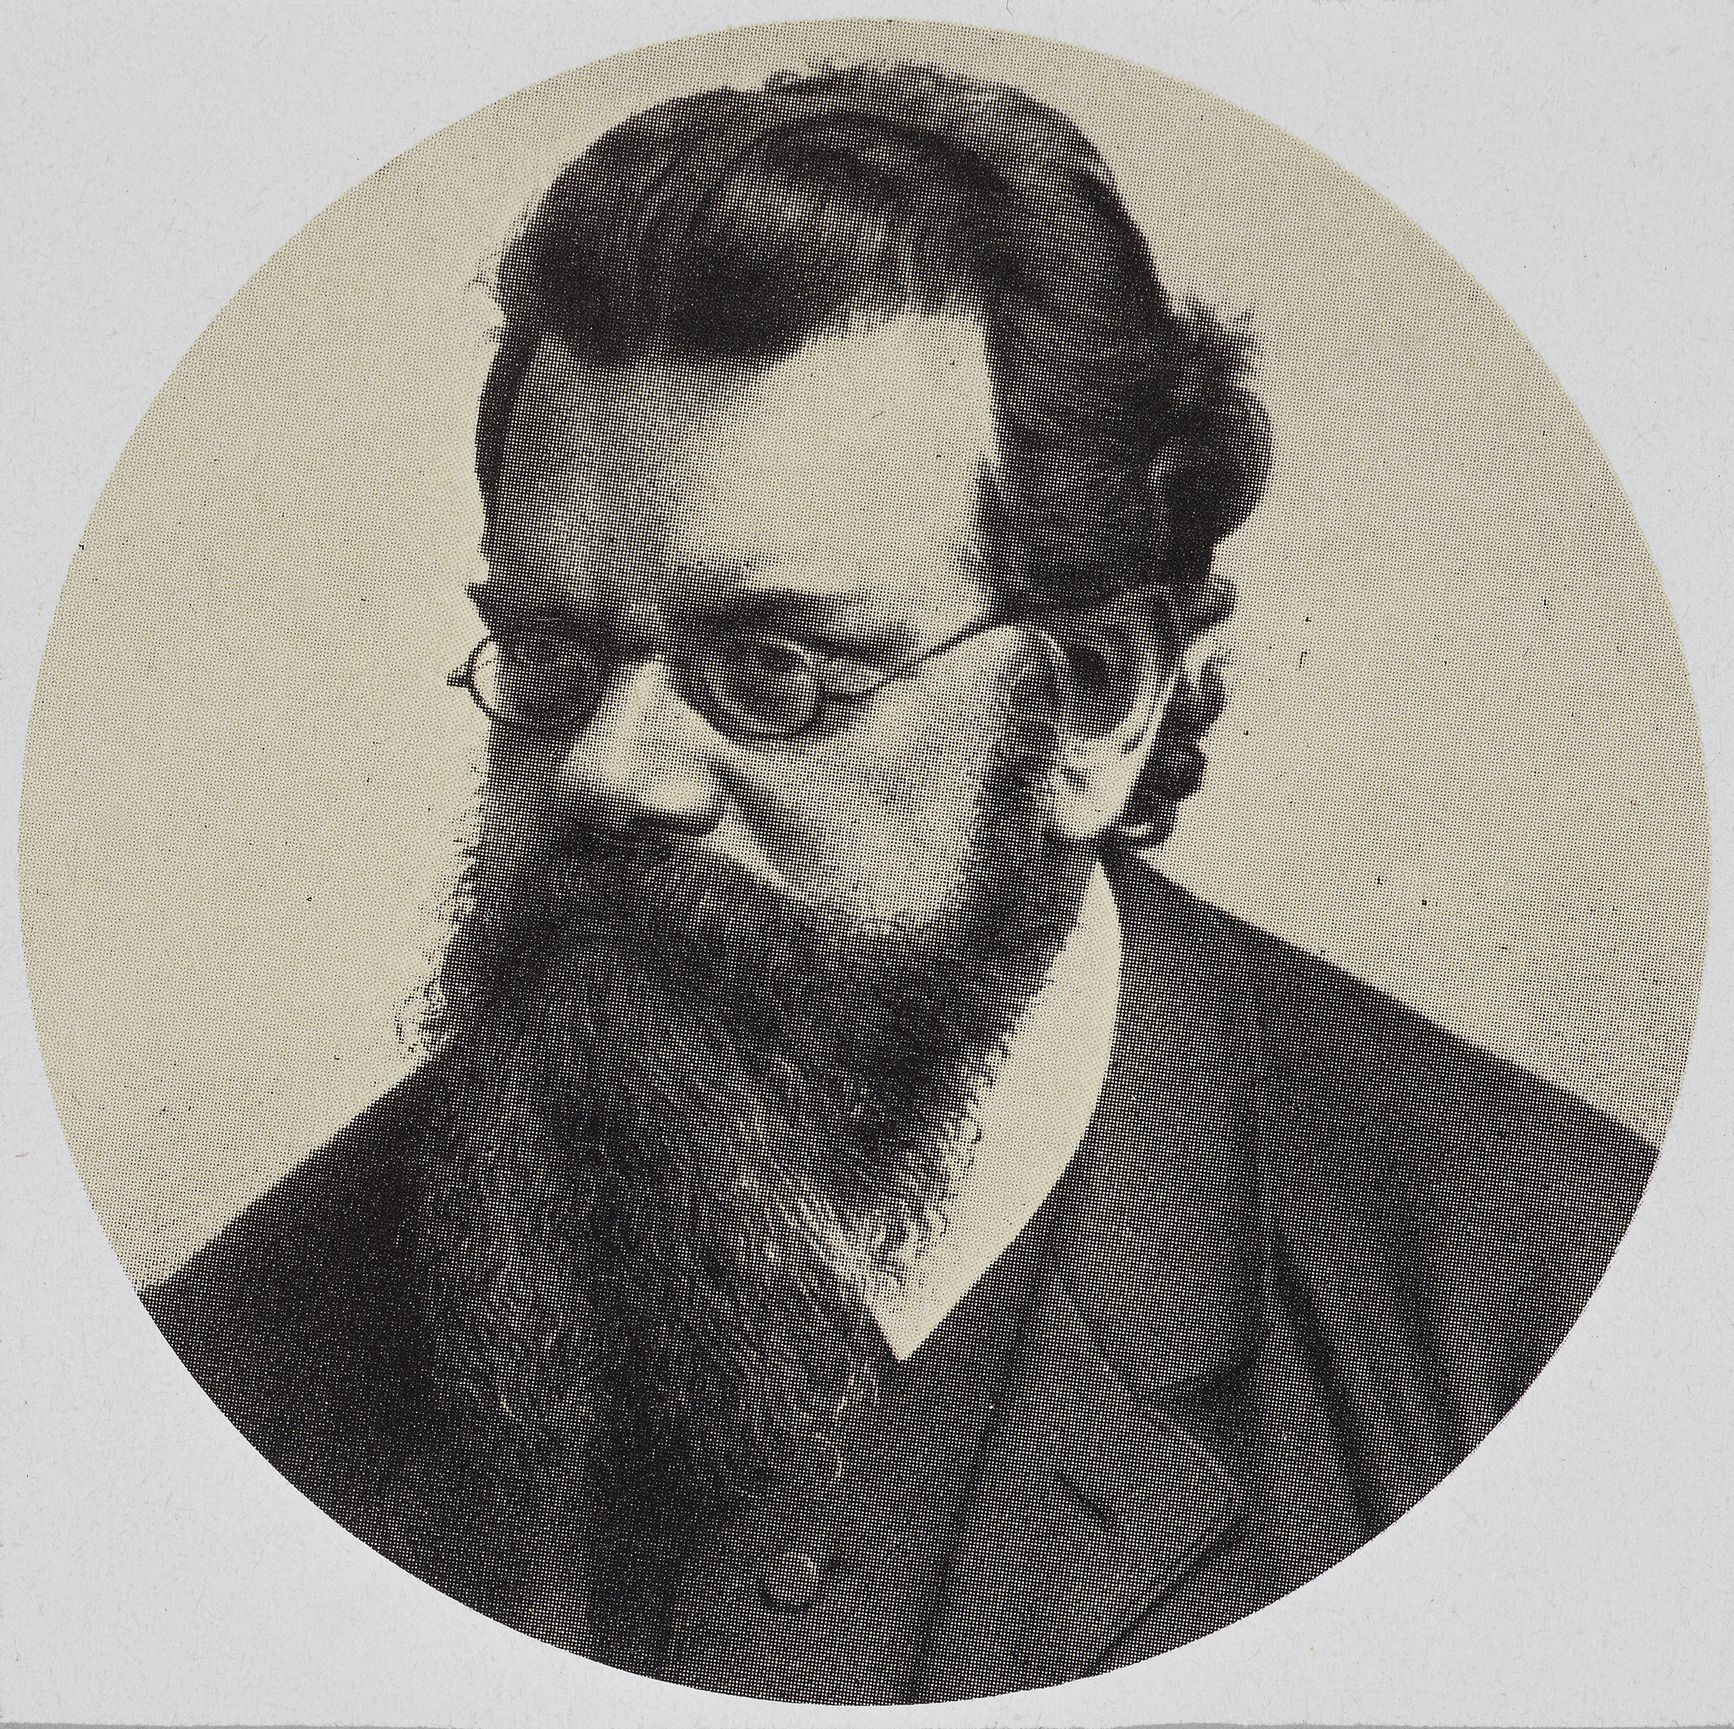 What Are Boltzmann Brains? - Physics Definition